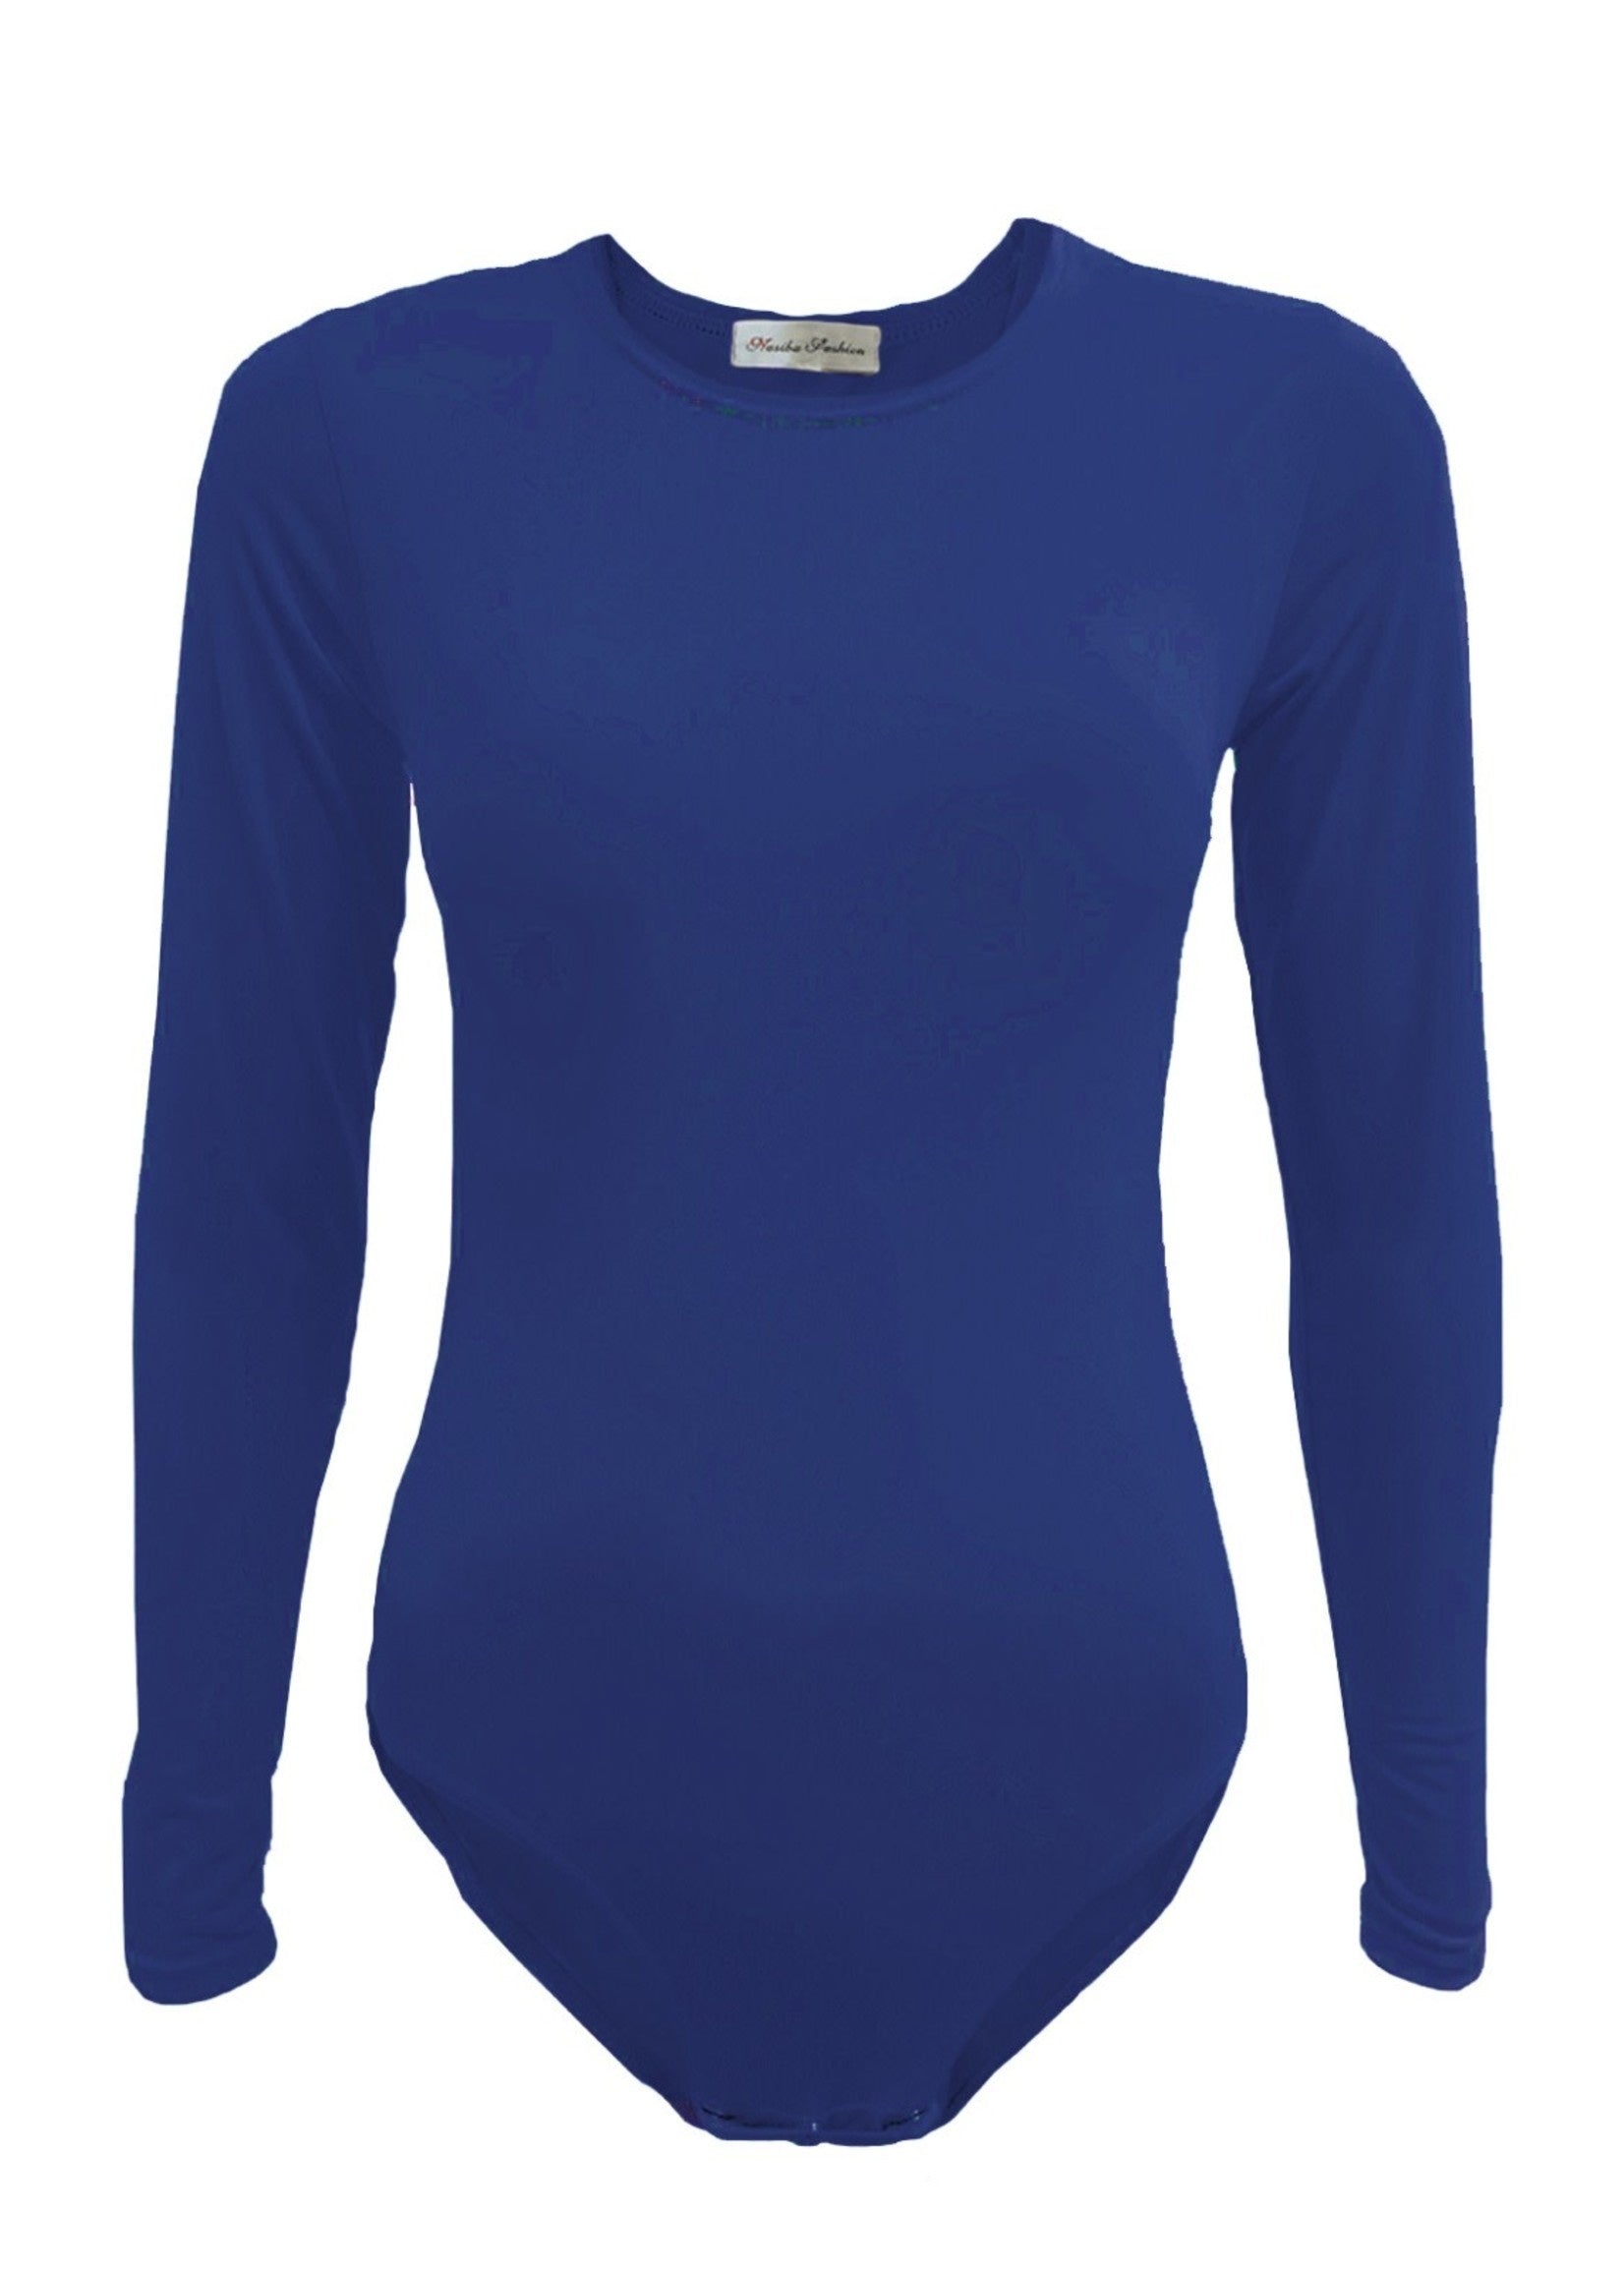 Lycra Bodysuit - Mid Blue